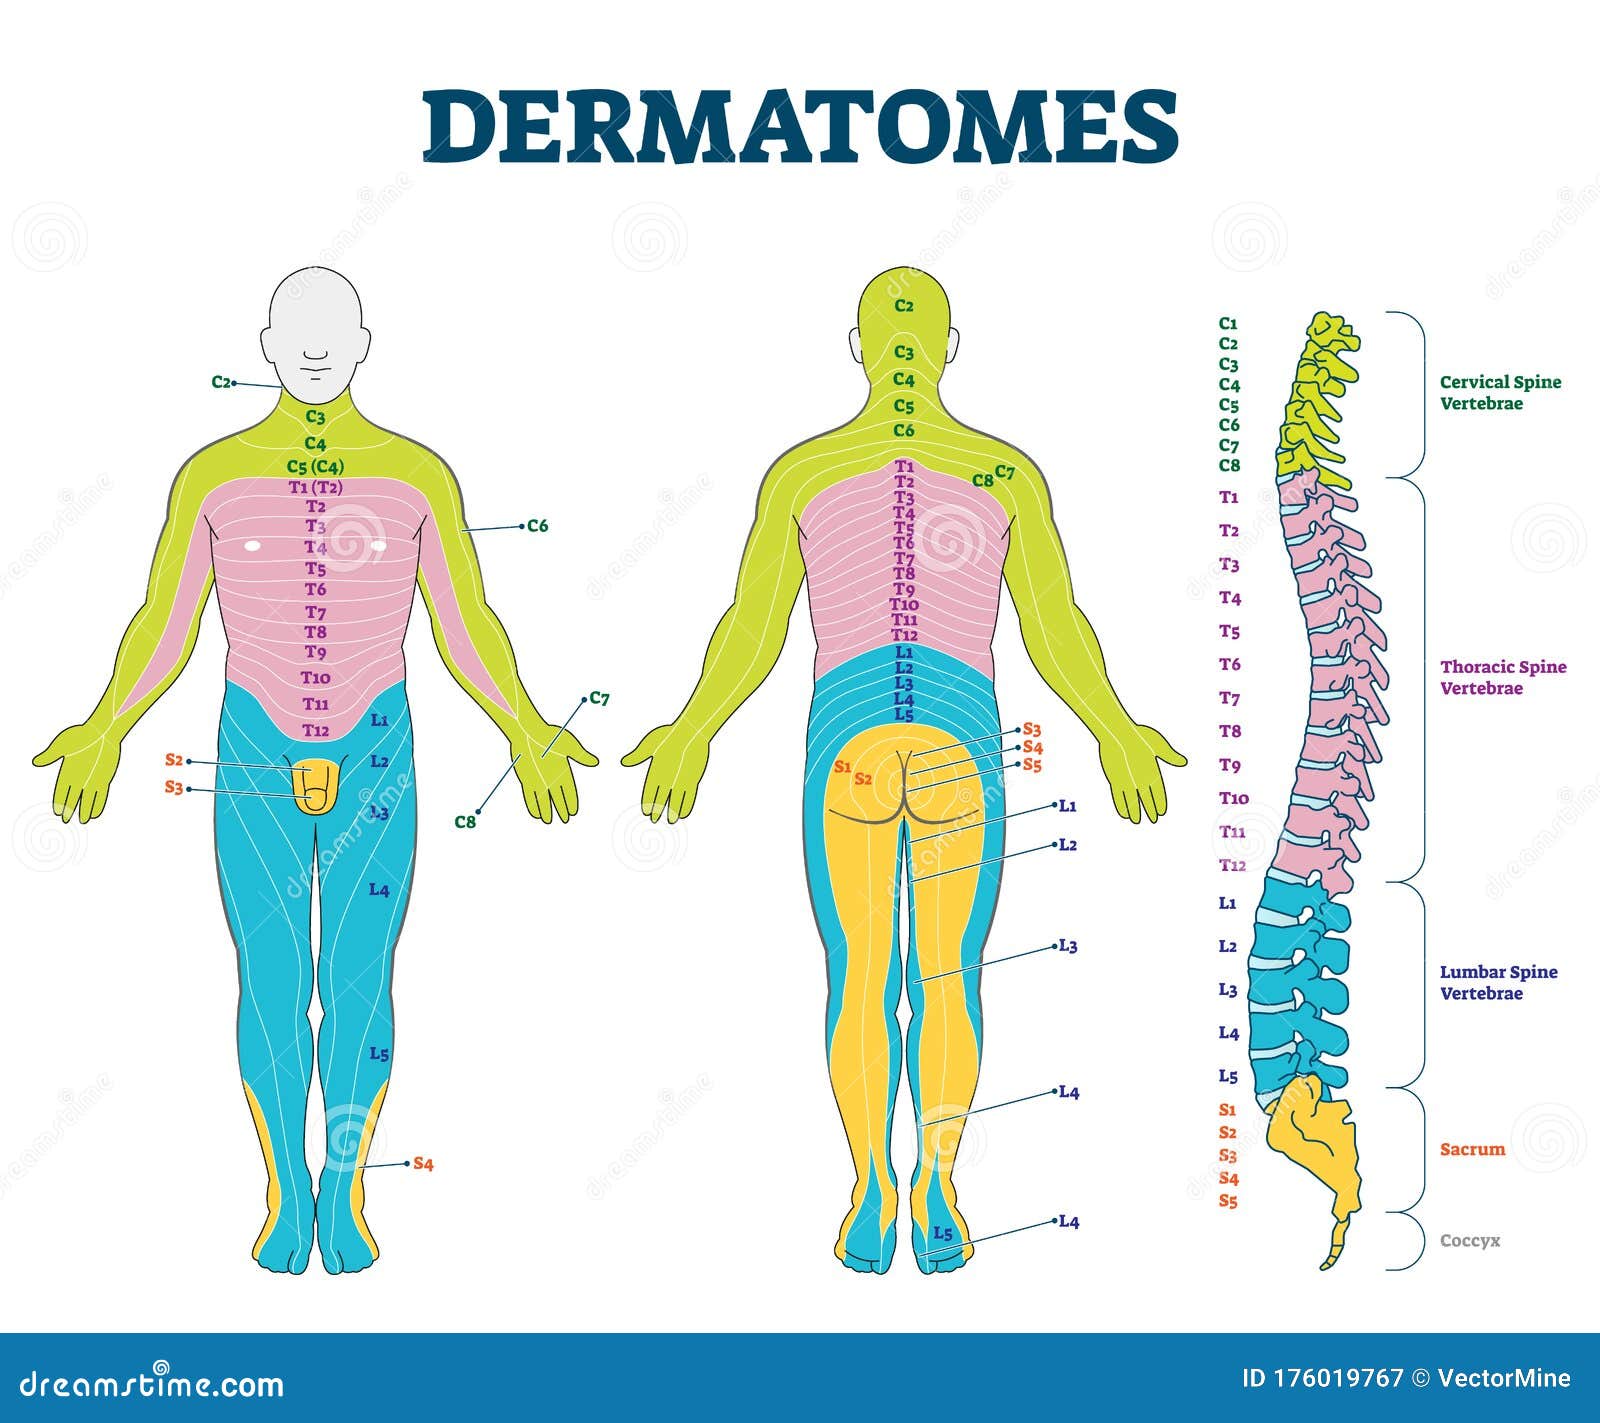 dermatomes  . labeled educational anatomical skin parts.